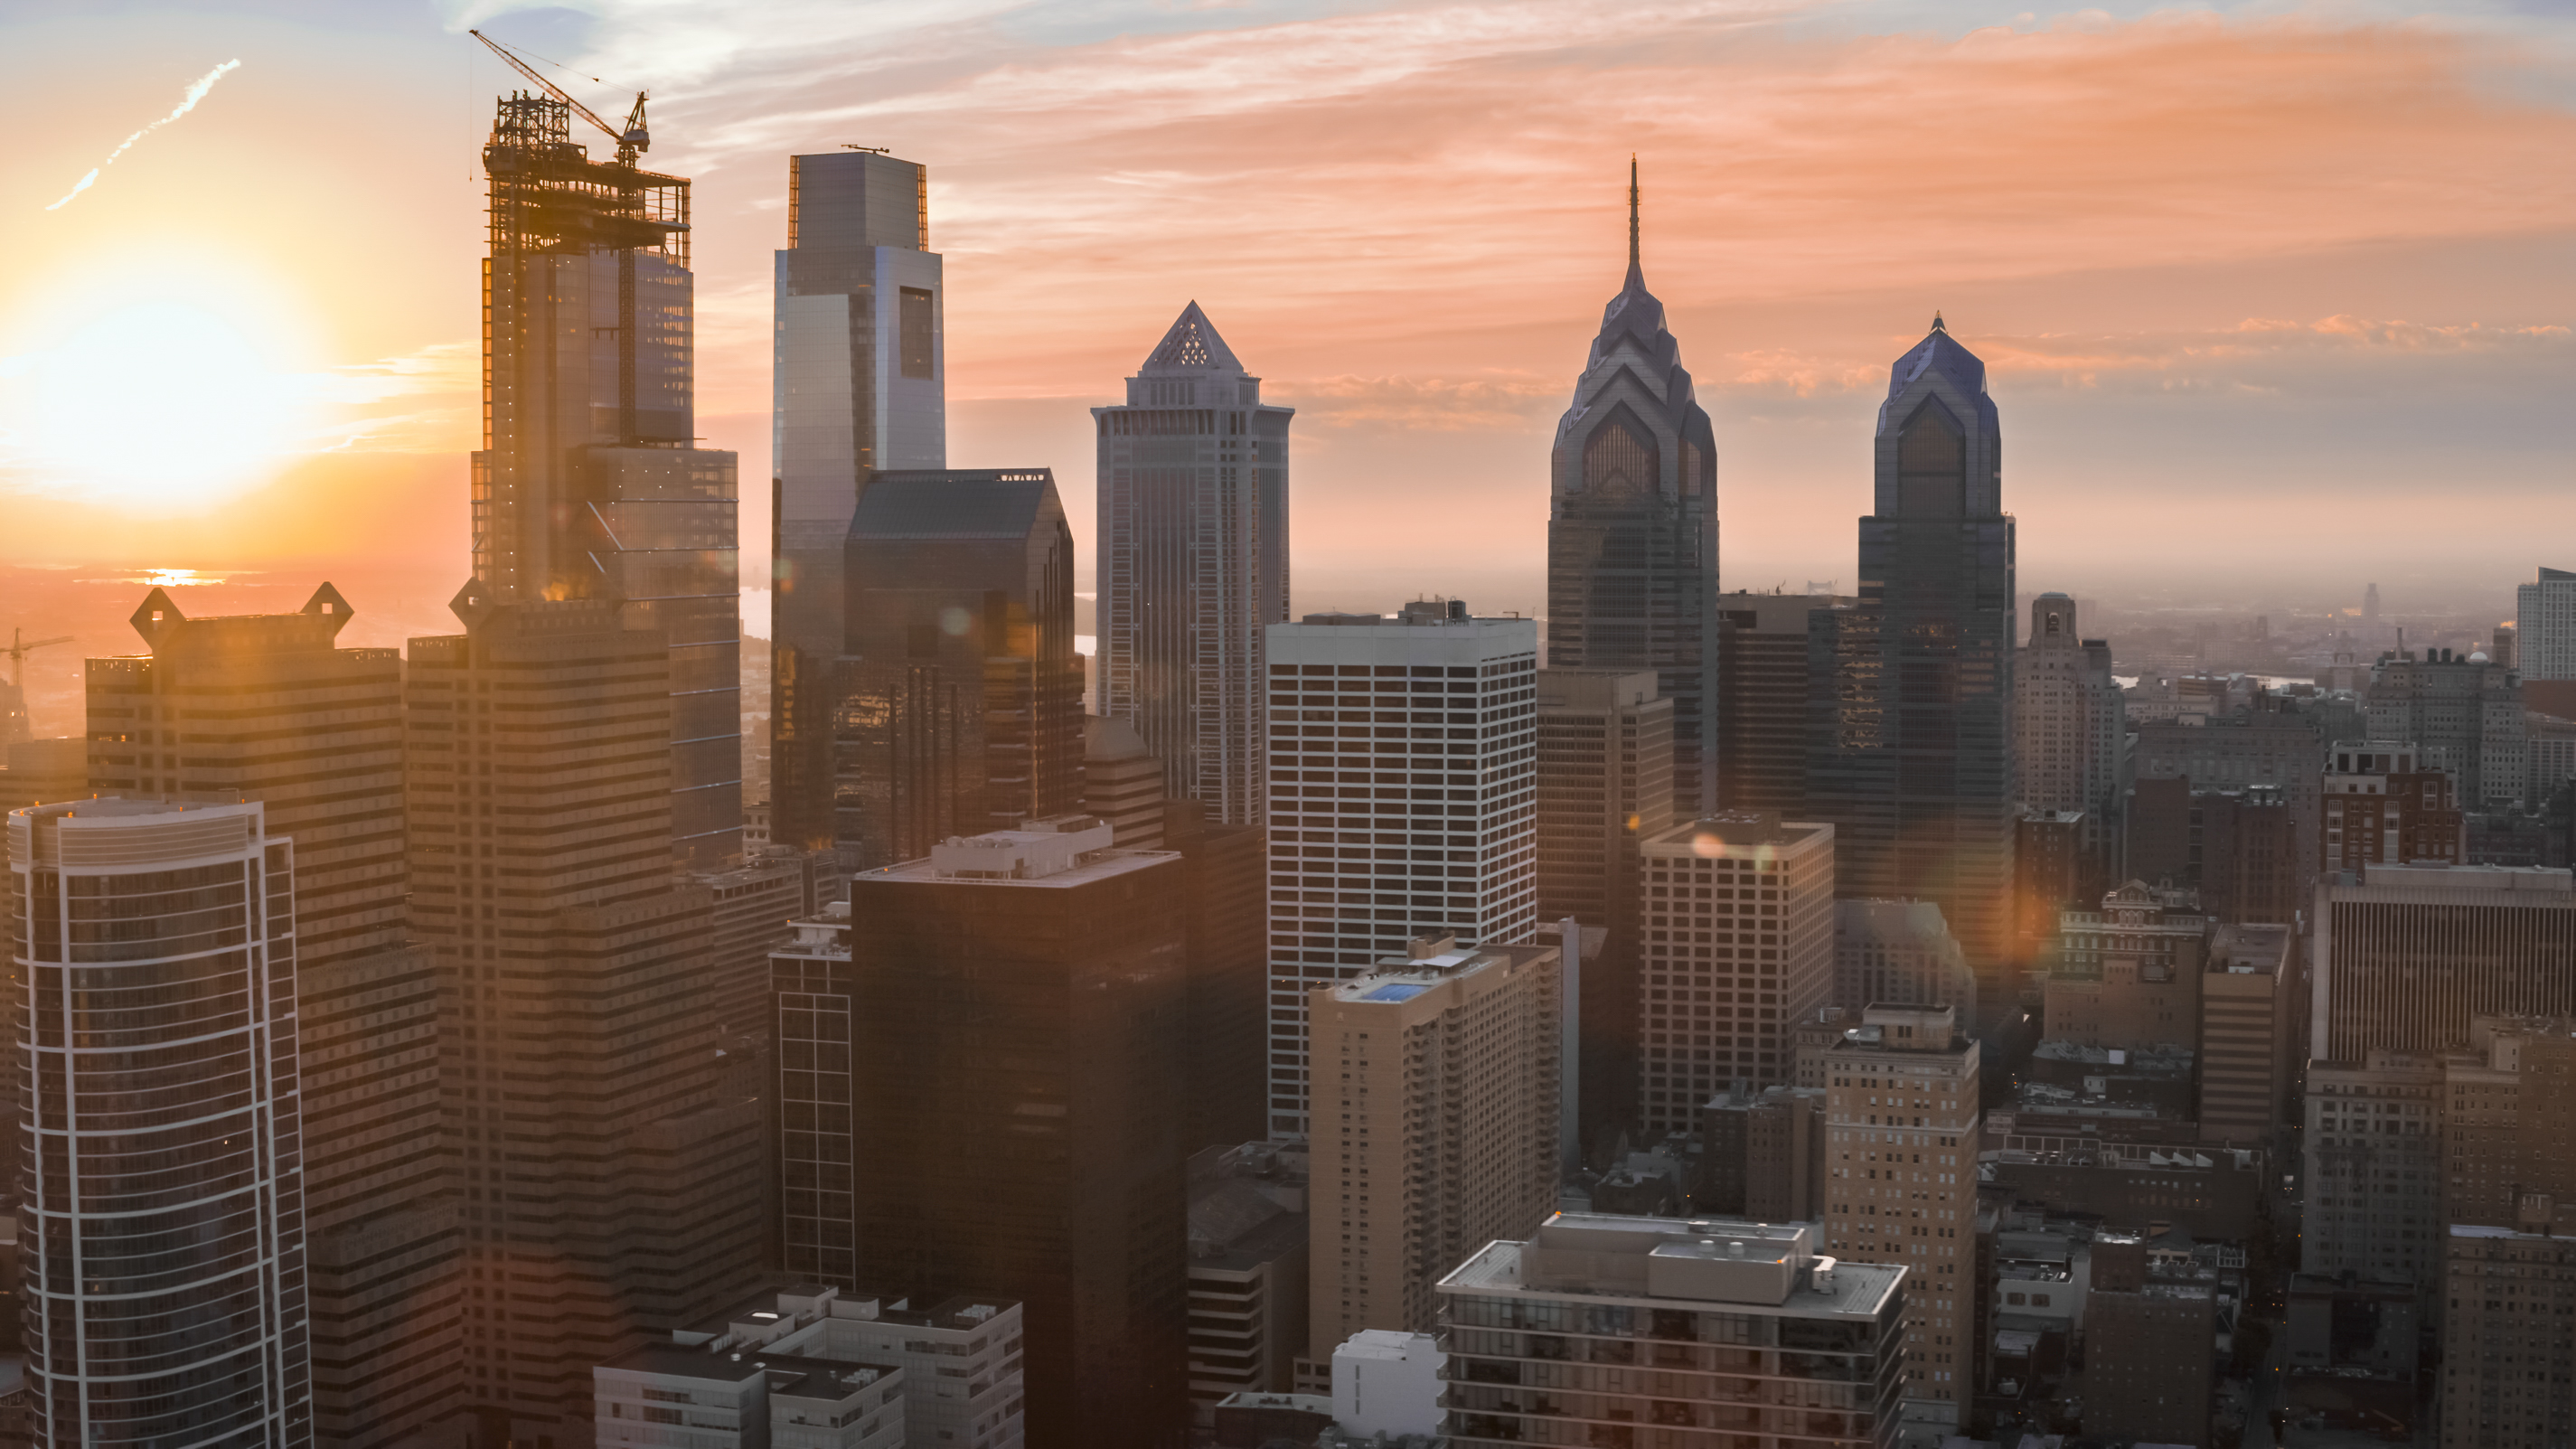 An image of the Philadelphia city skyline at sunset.